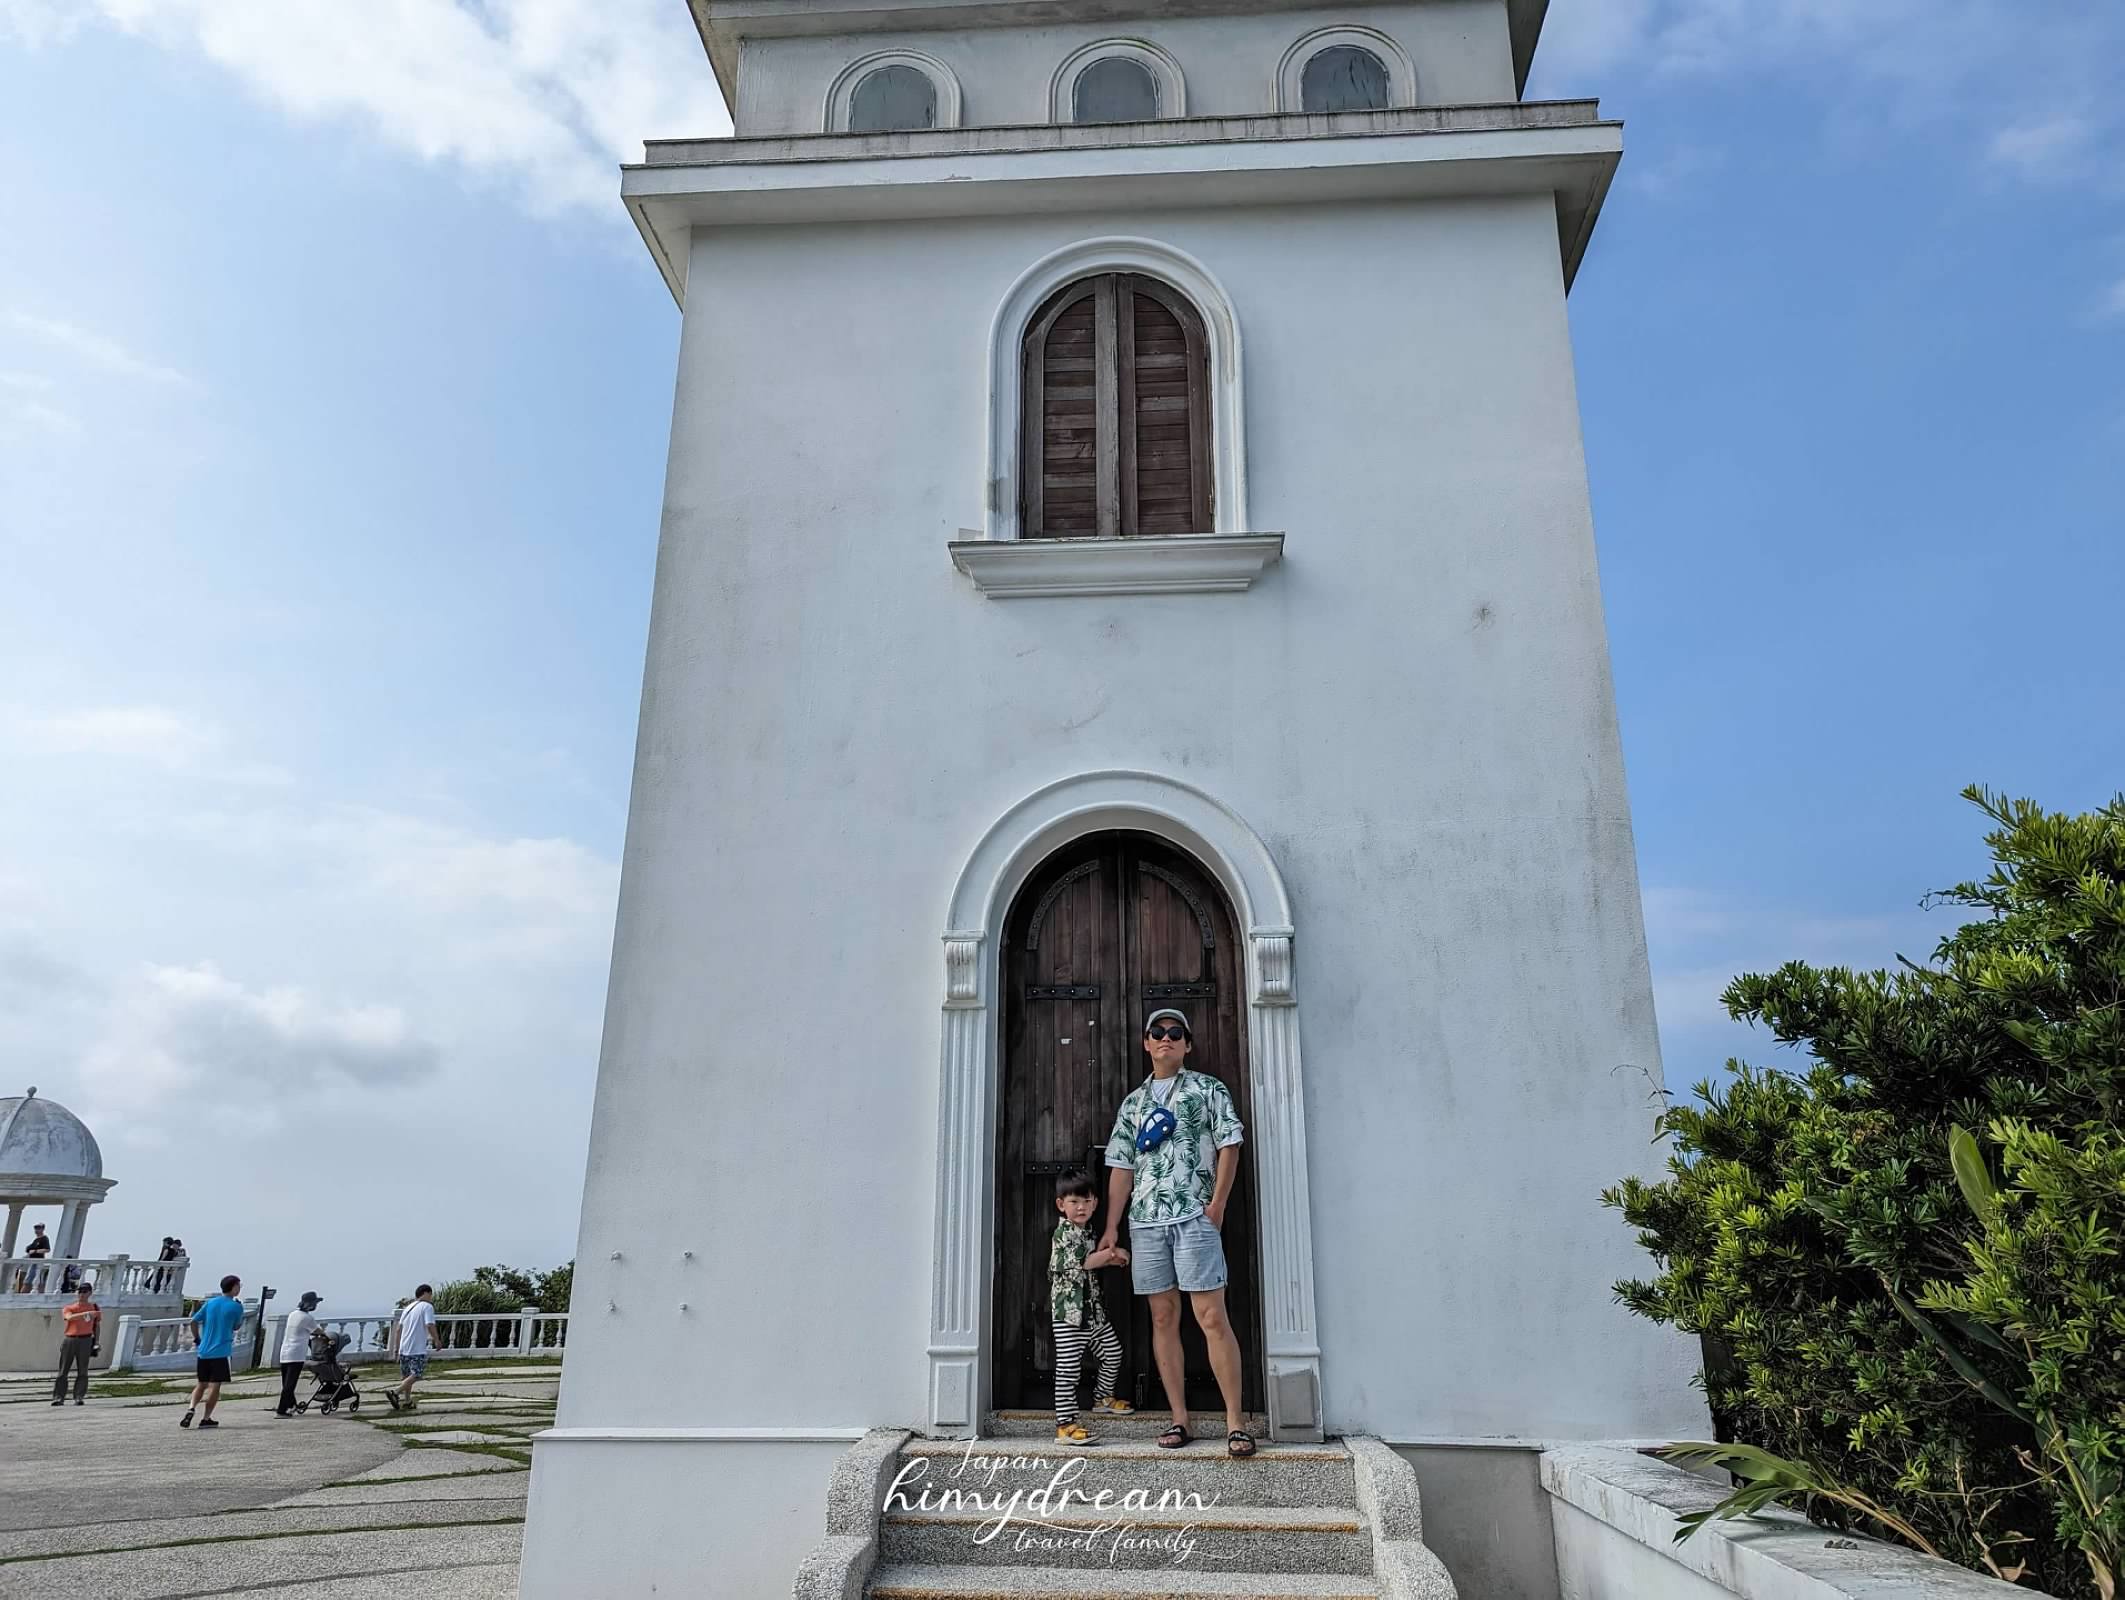 Sandiaojiao Lighthouse